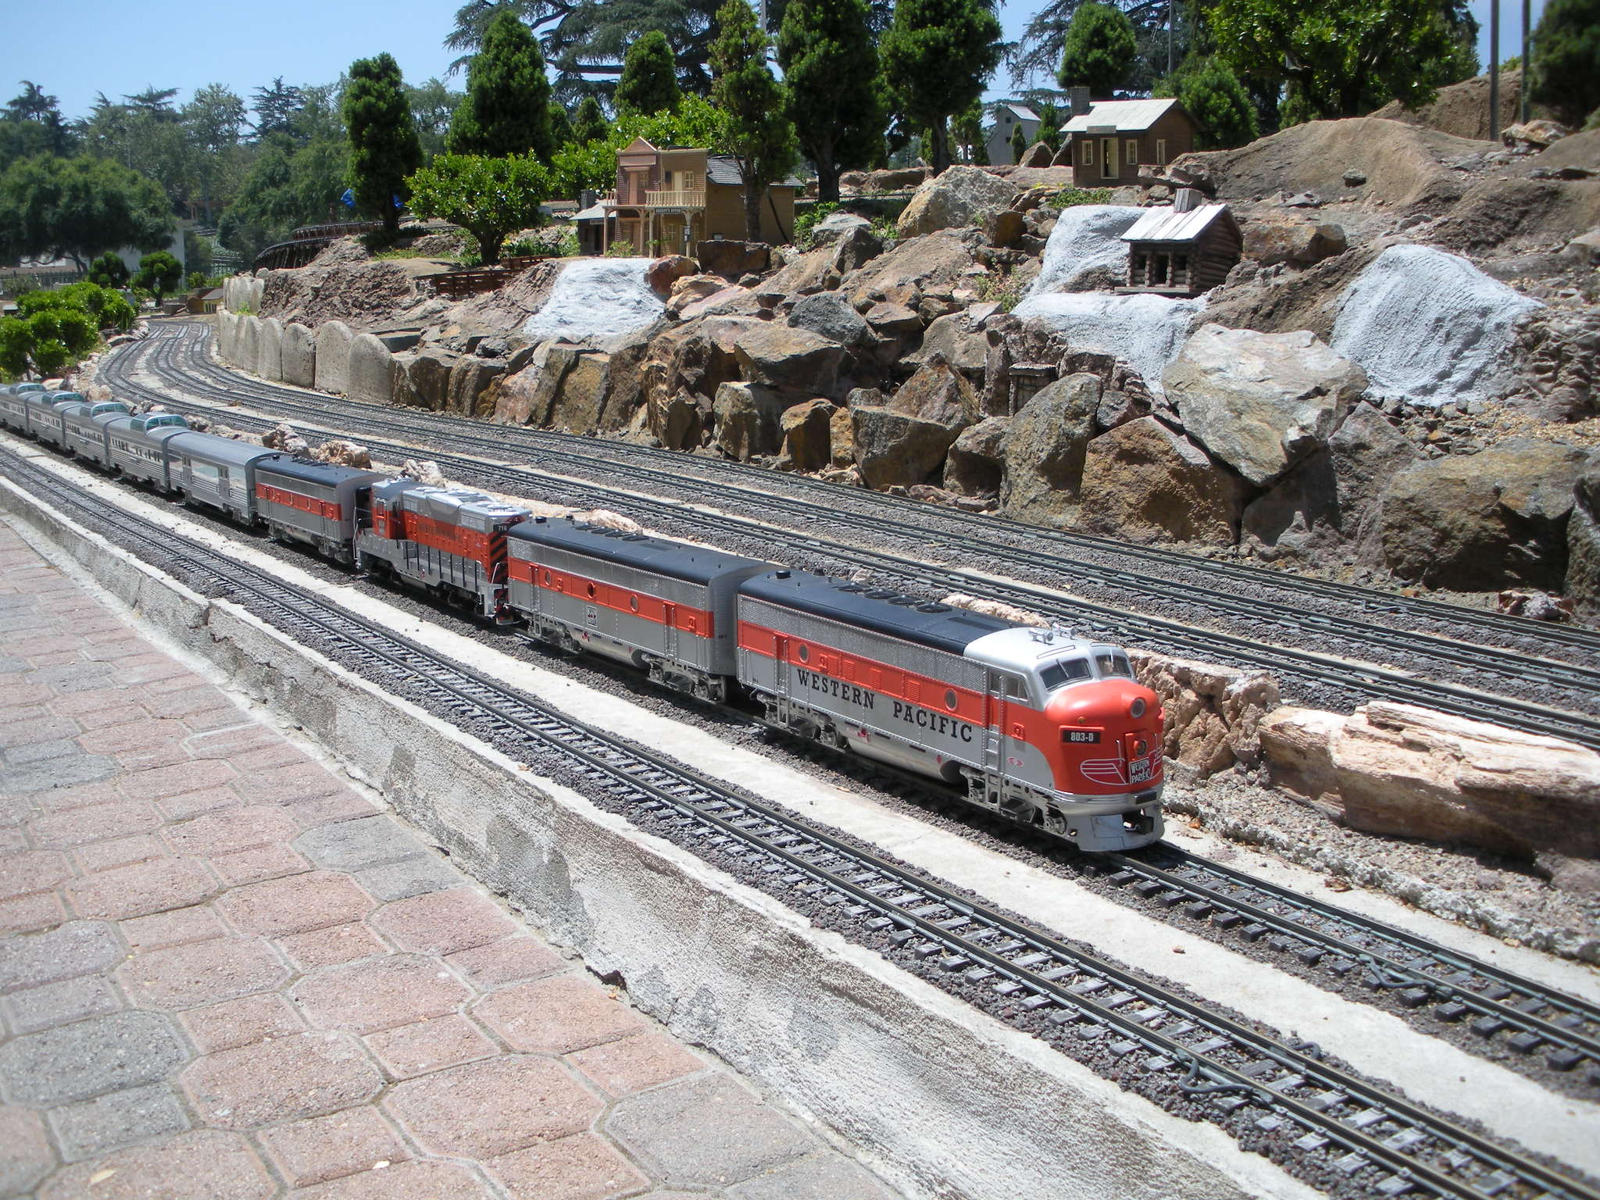 Western Pacific Model Passenger Train by rlkitterman on DeviantArt